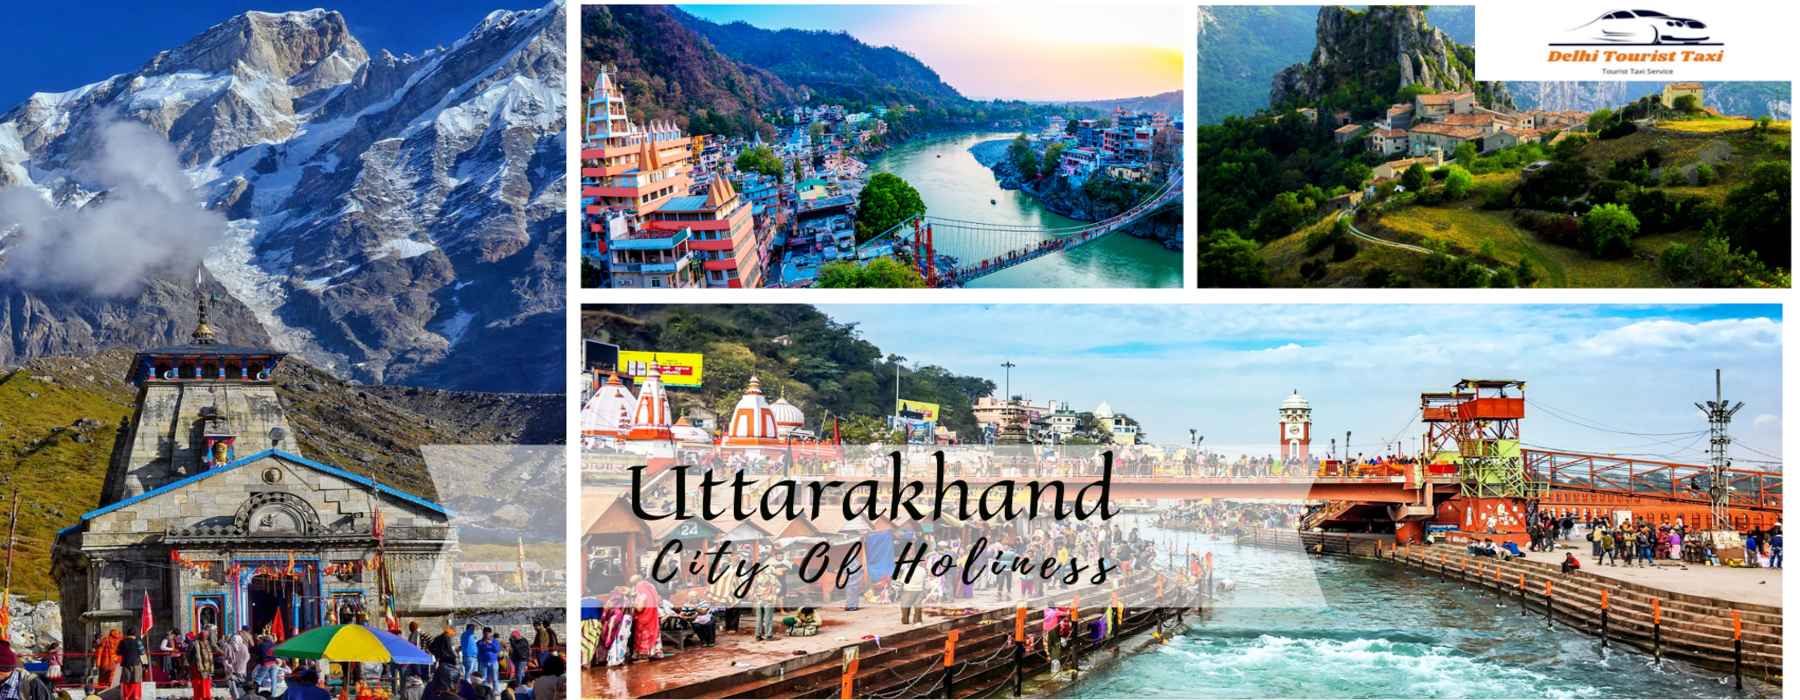 Uttarakhand_tourist_place